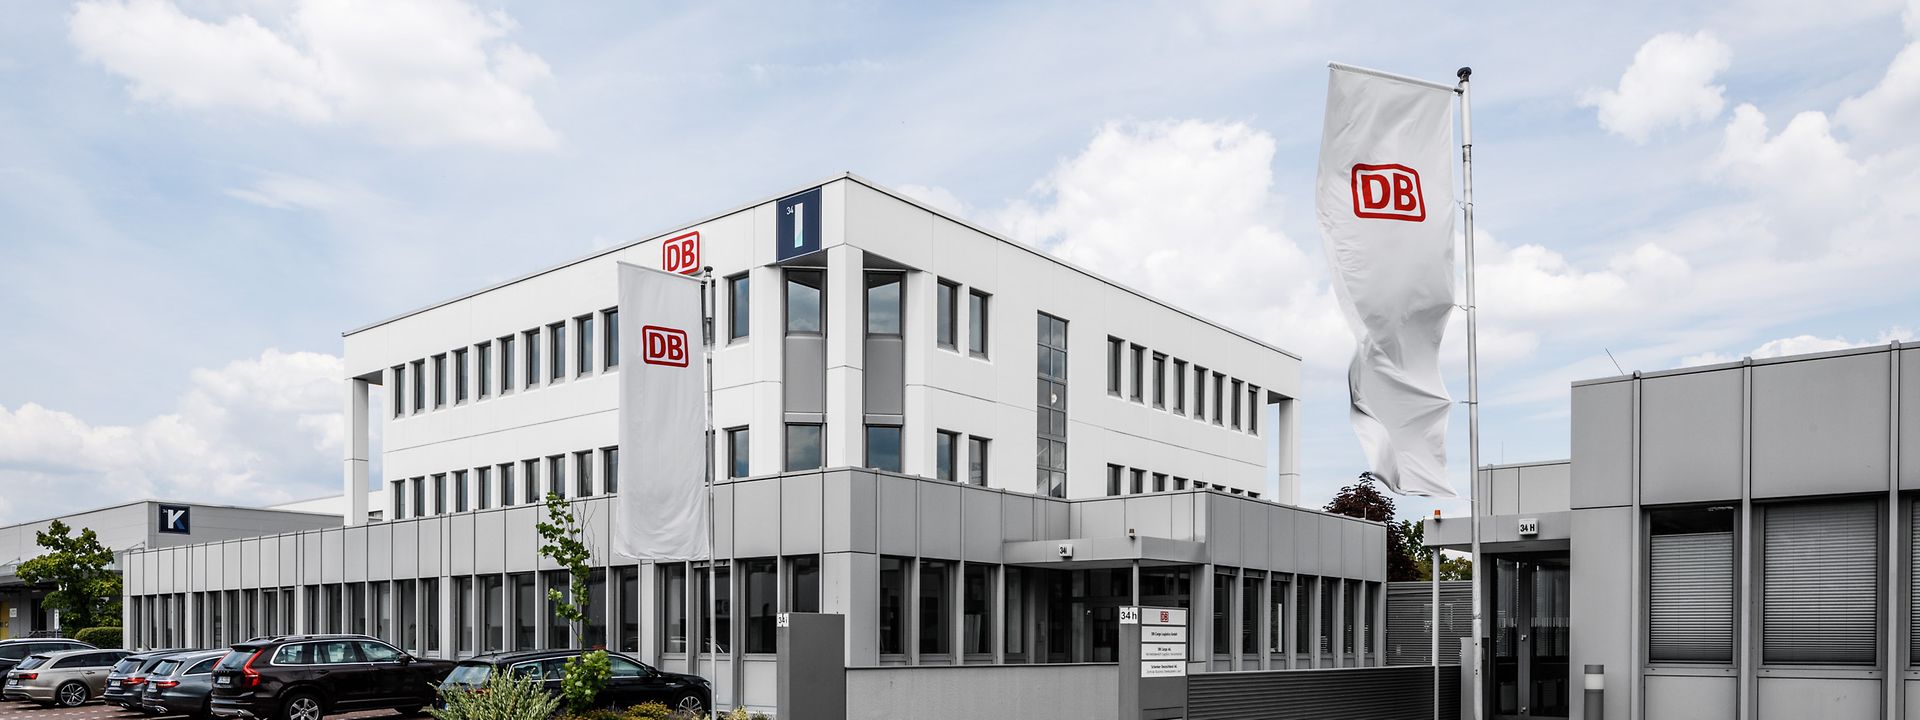 DB Cargo Logistics headquarters in Kelsterbach